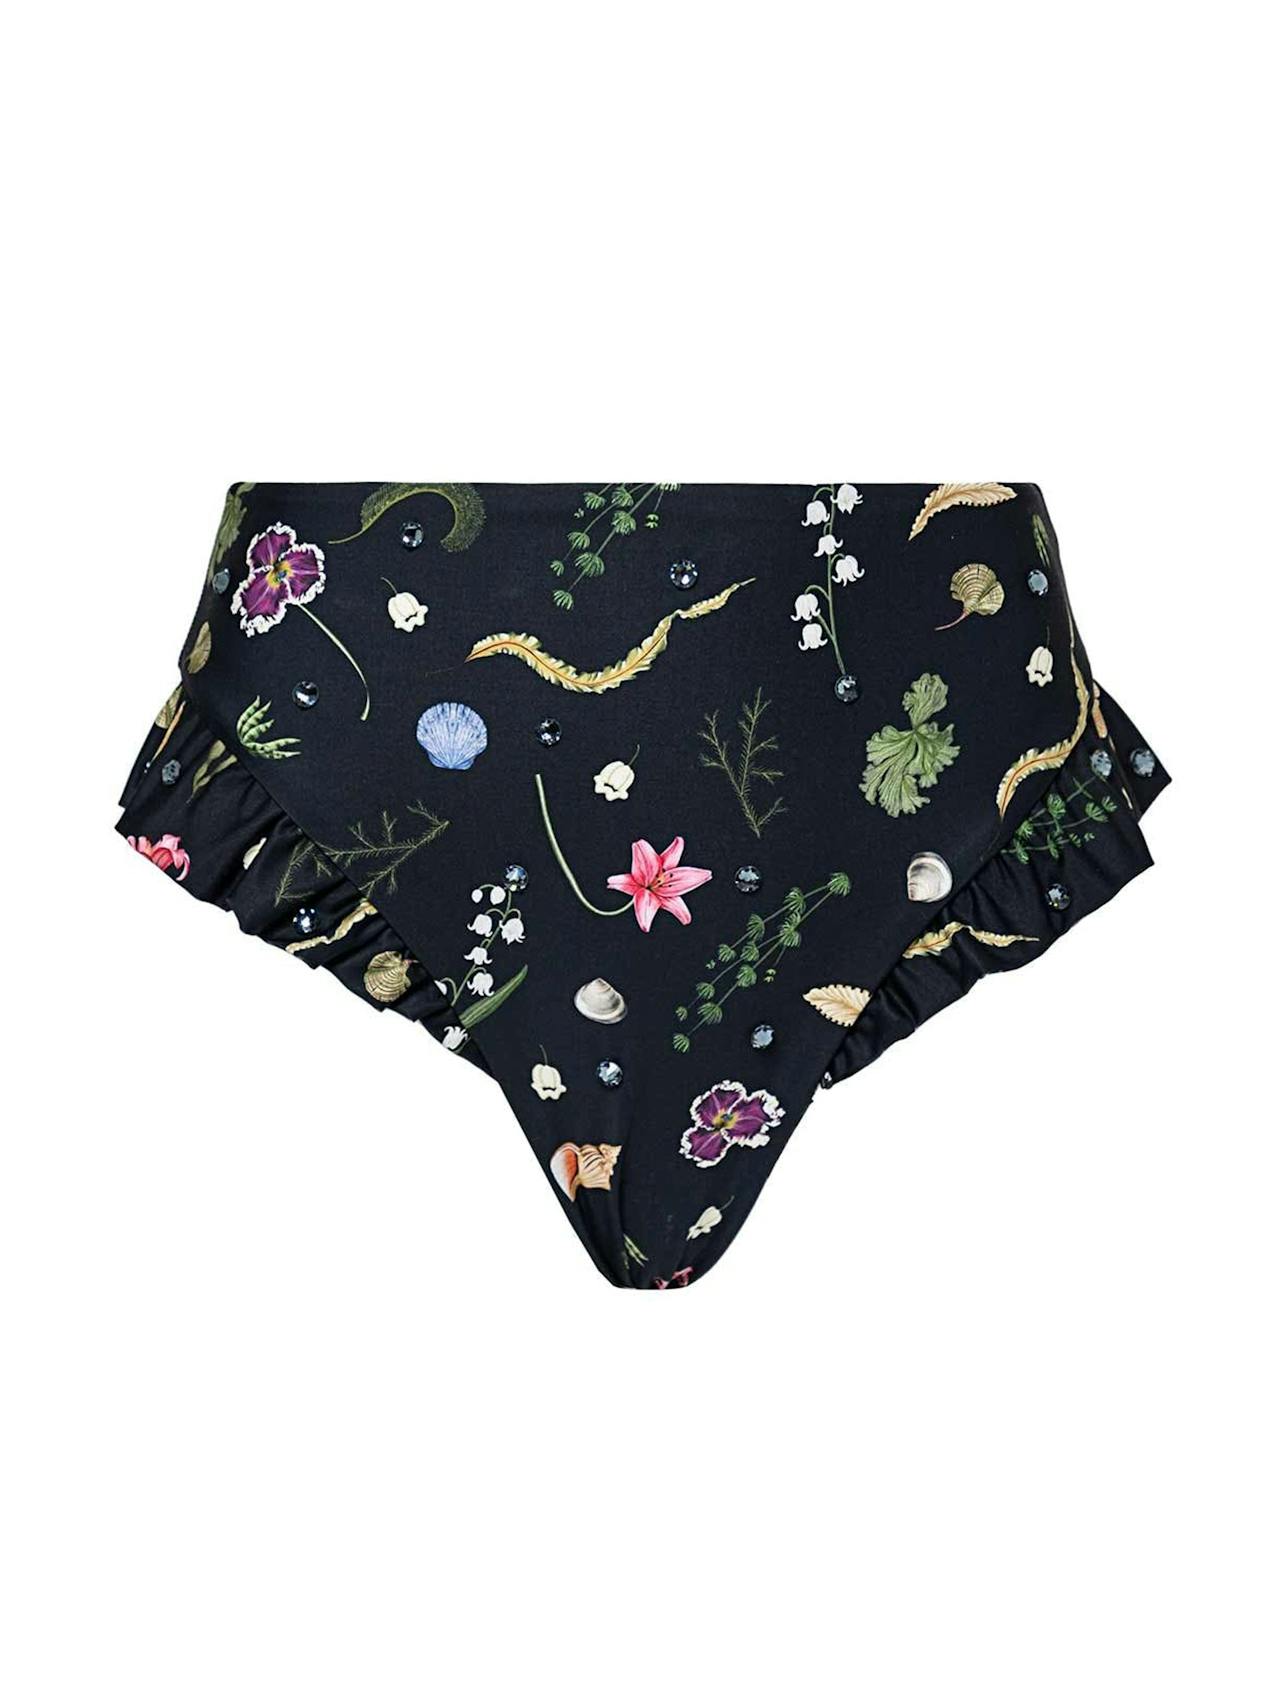 Jengibre Tesoro embroidered bikini bottom